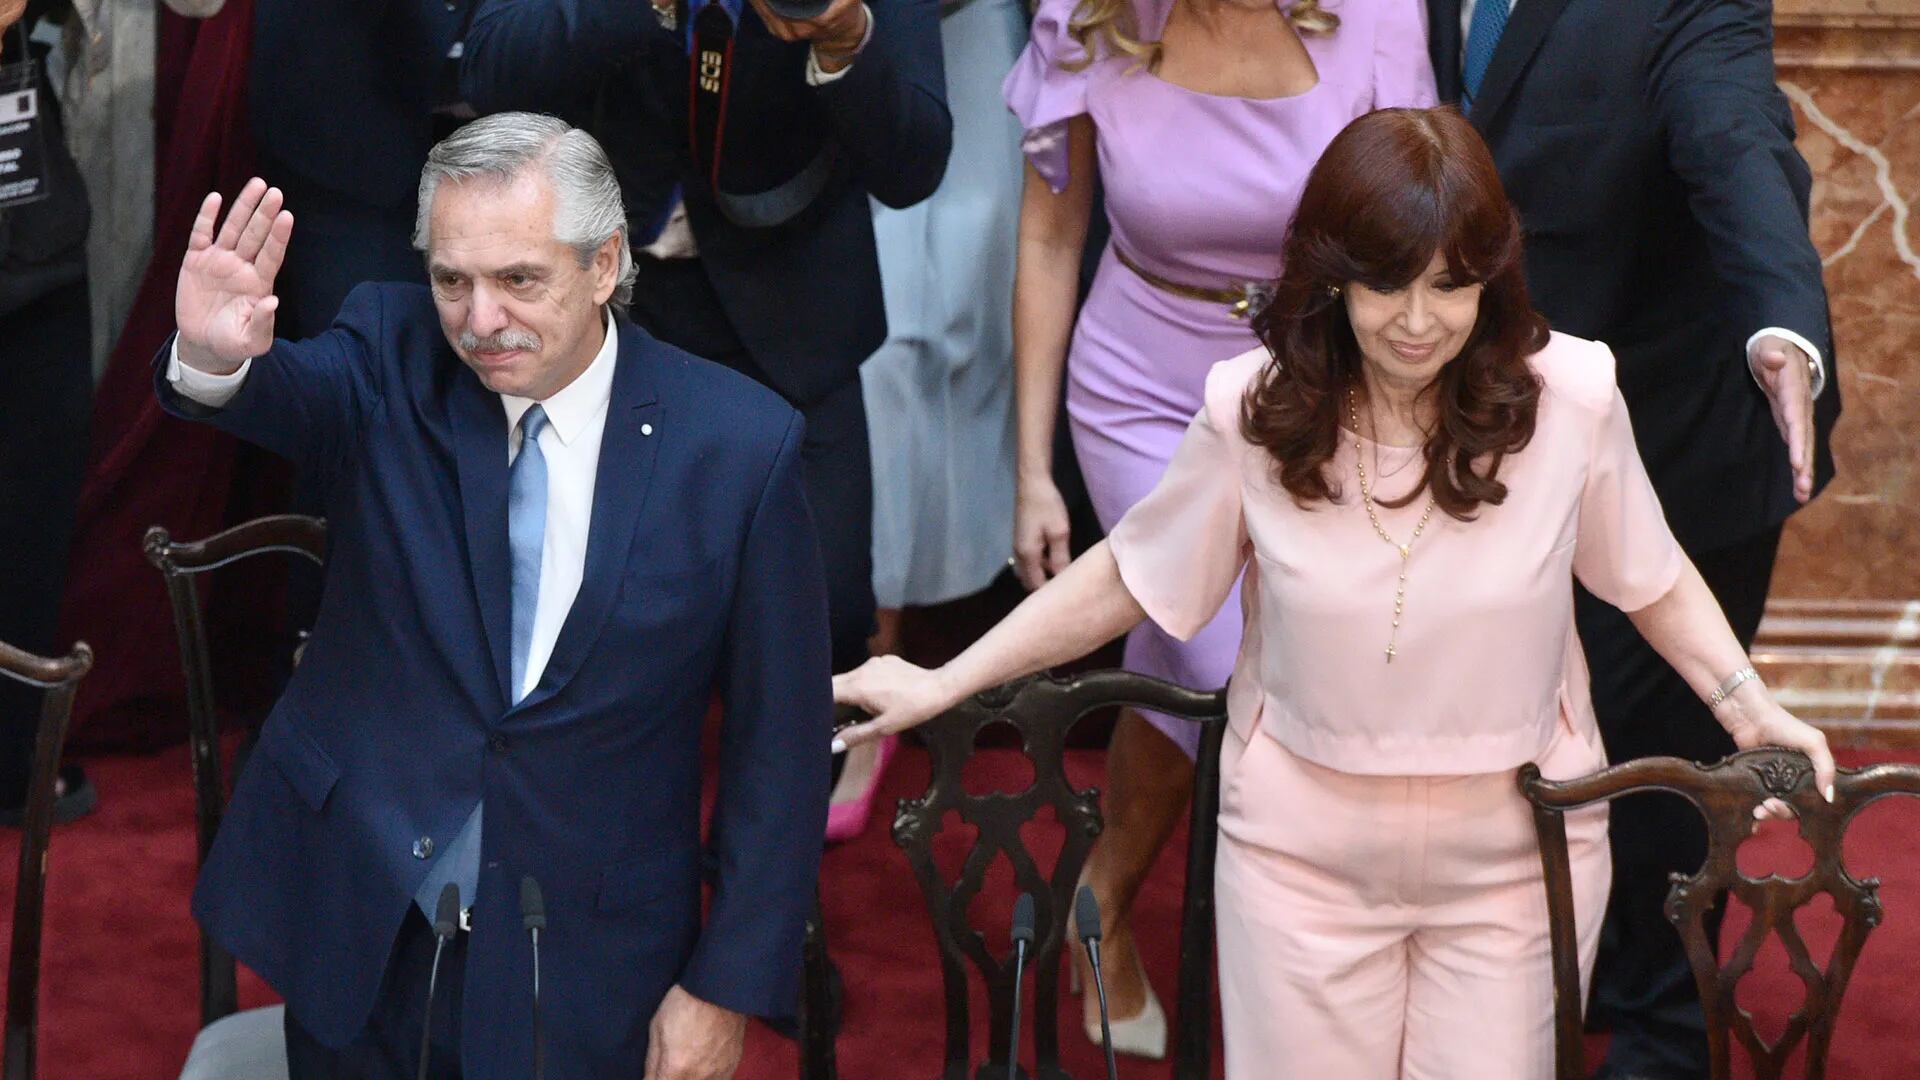 El guiño de Alberto Fernández a Cristina Kirchner: “Espero que la Justicia deje de servir a factores de poder”